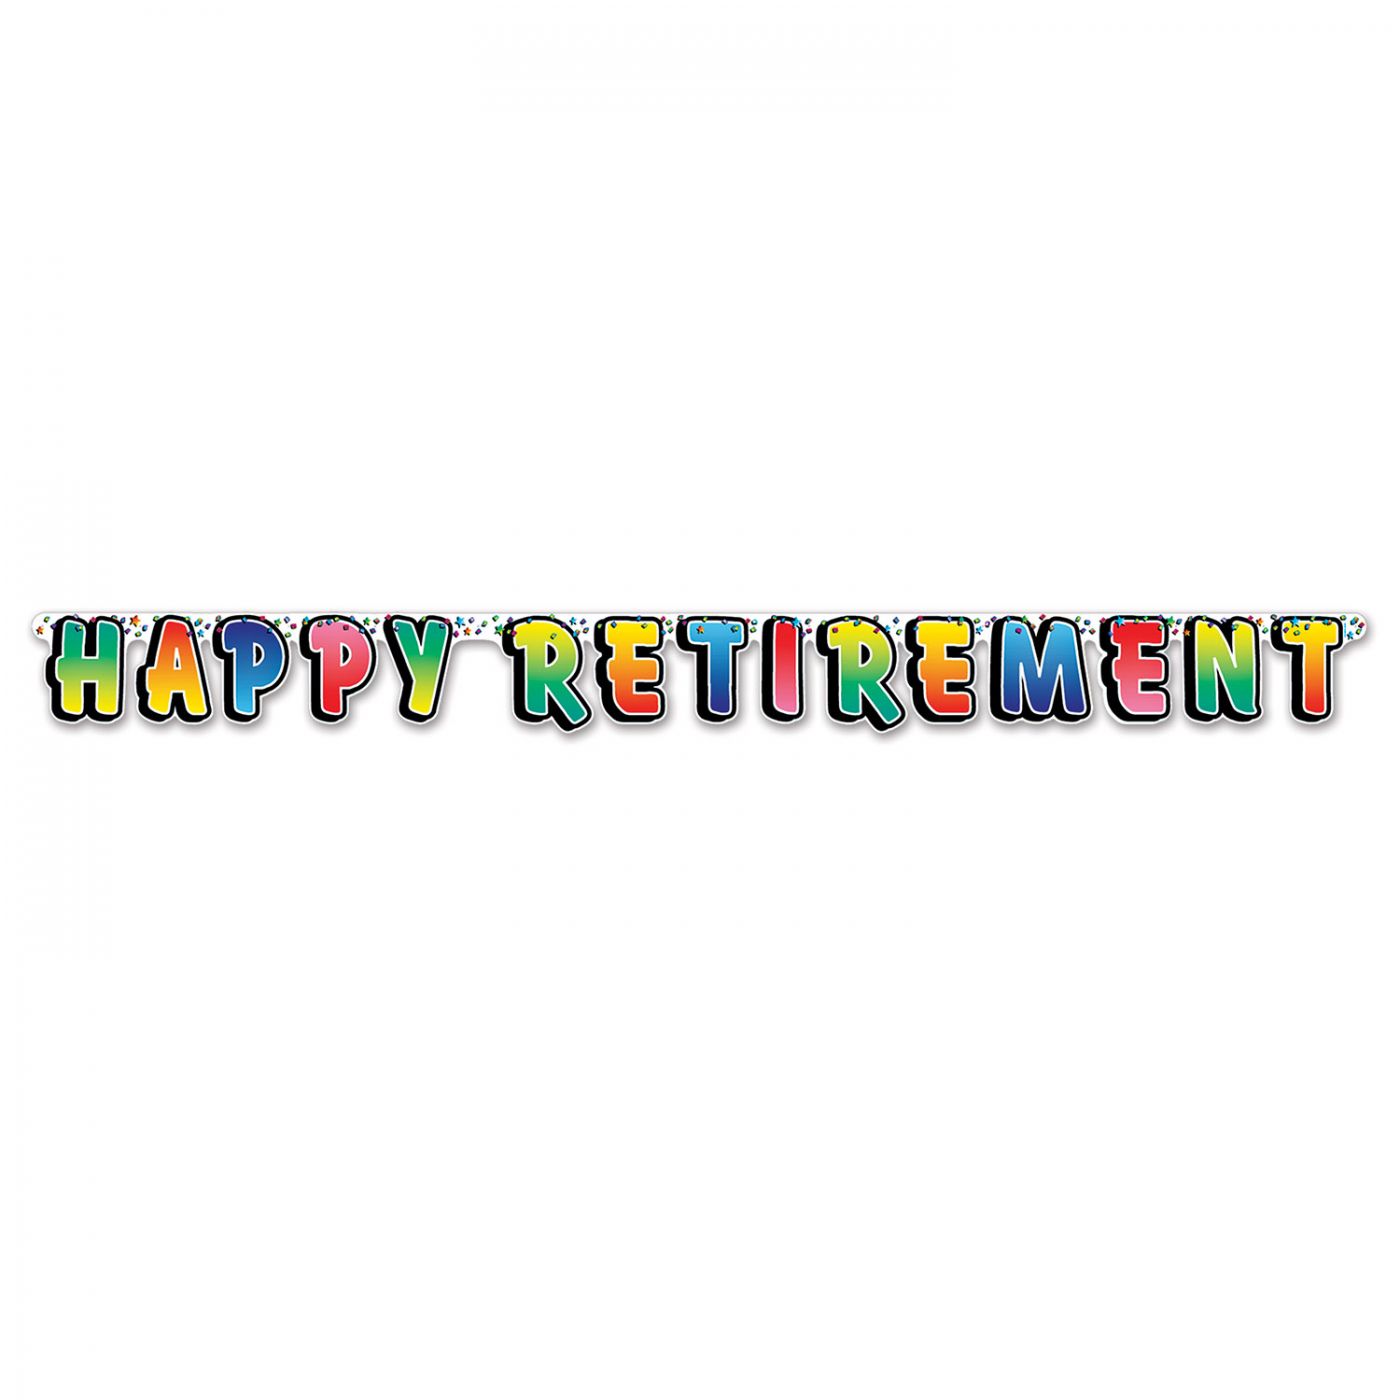 Happy Retirement Streamer image